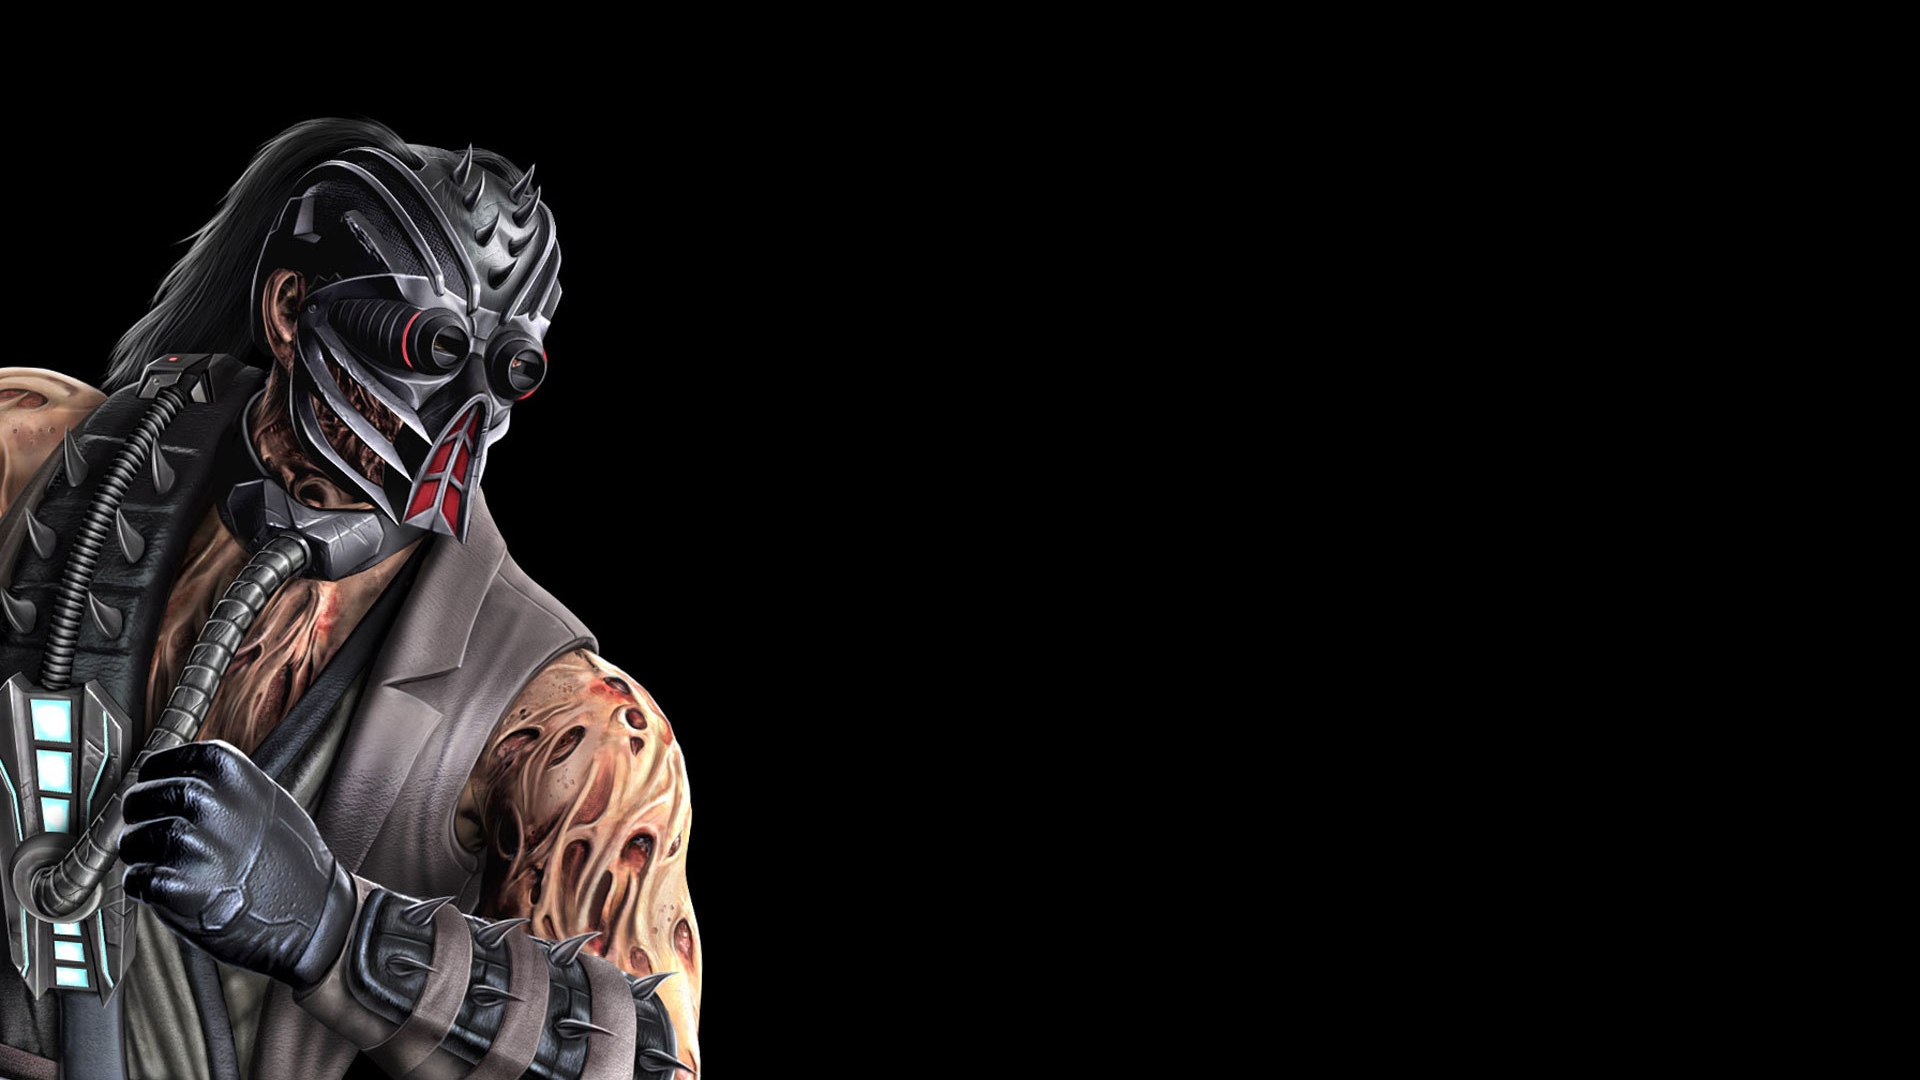 Wallpaper Cabal Mortal Kombat Mask Soldier Full HD 1080p